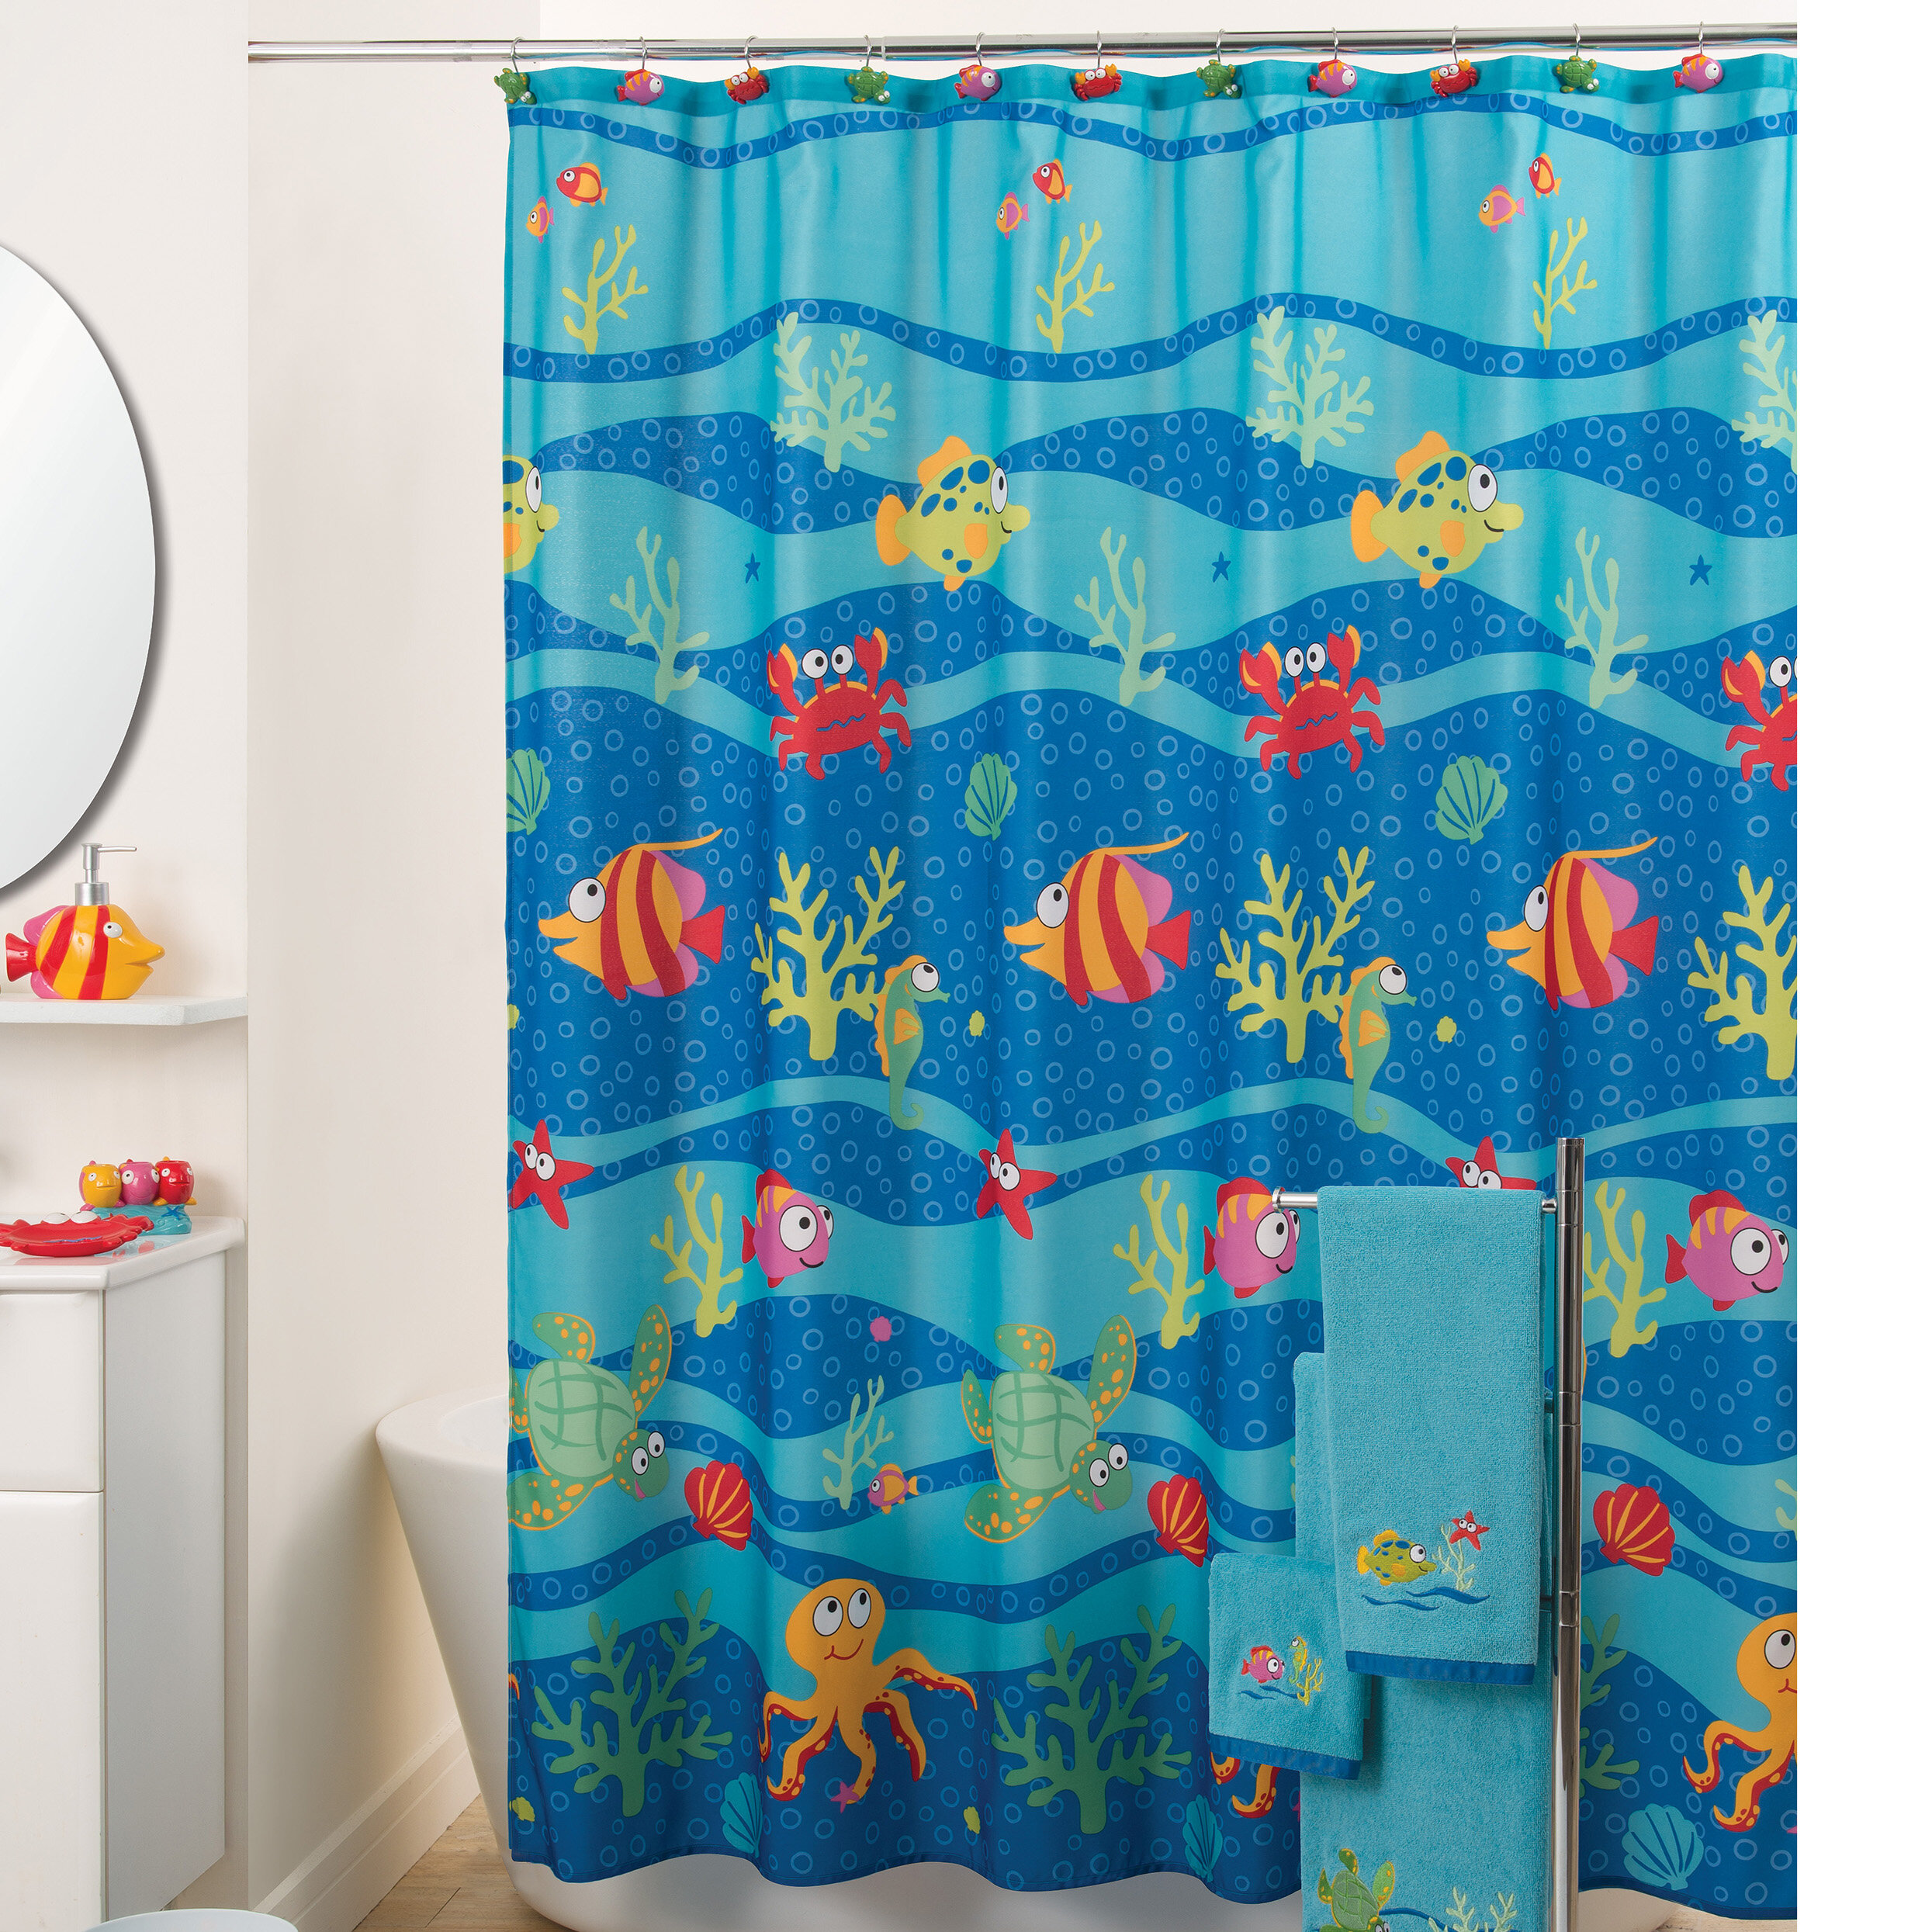 Sealife Colorful Ocean Fish Fabric Shower Curtain Bath Kids Child Octopus Decor 